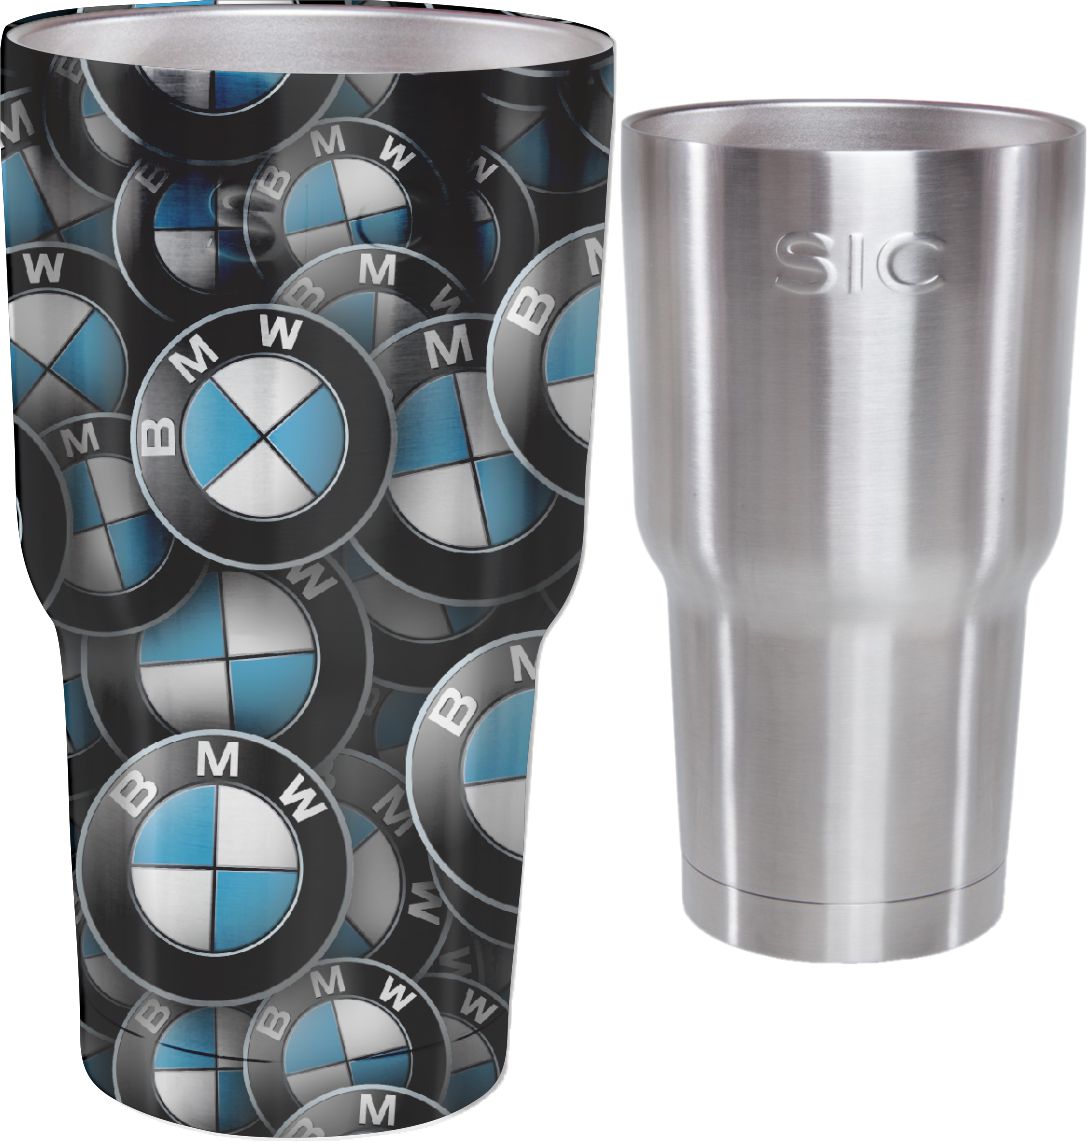 BMW Travel Mug 